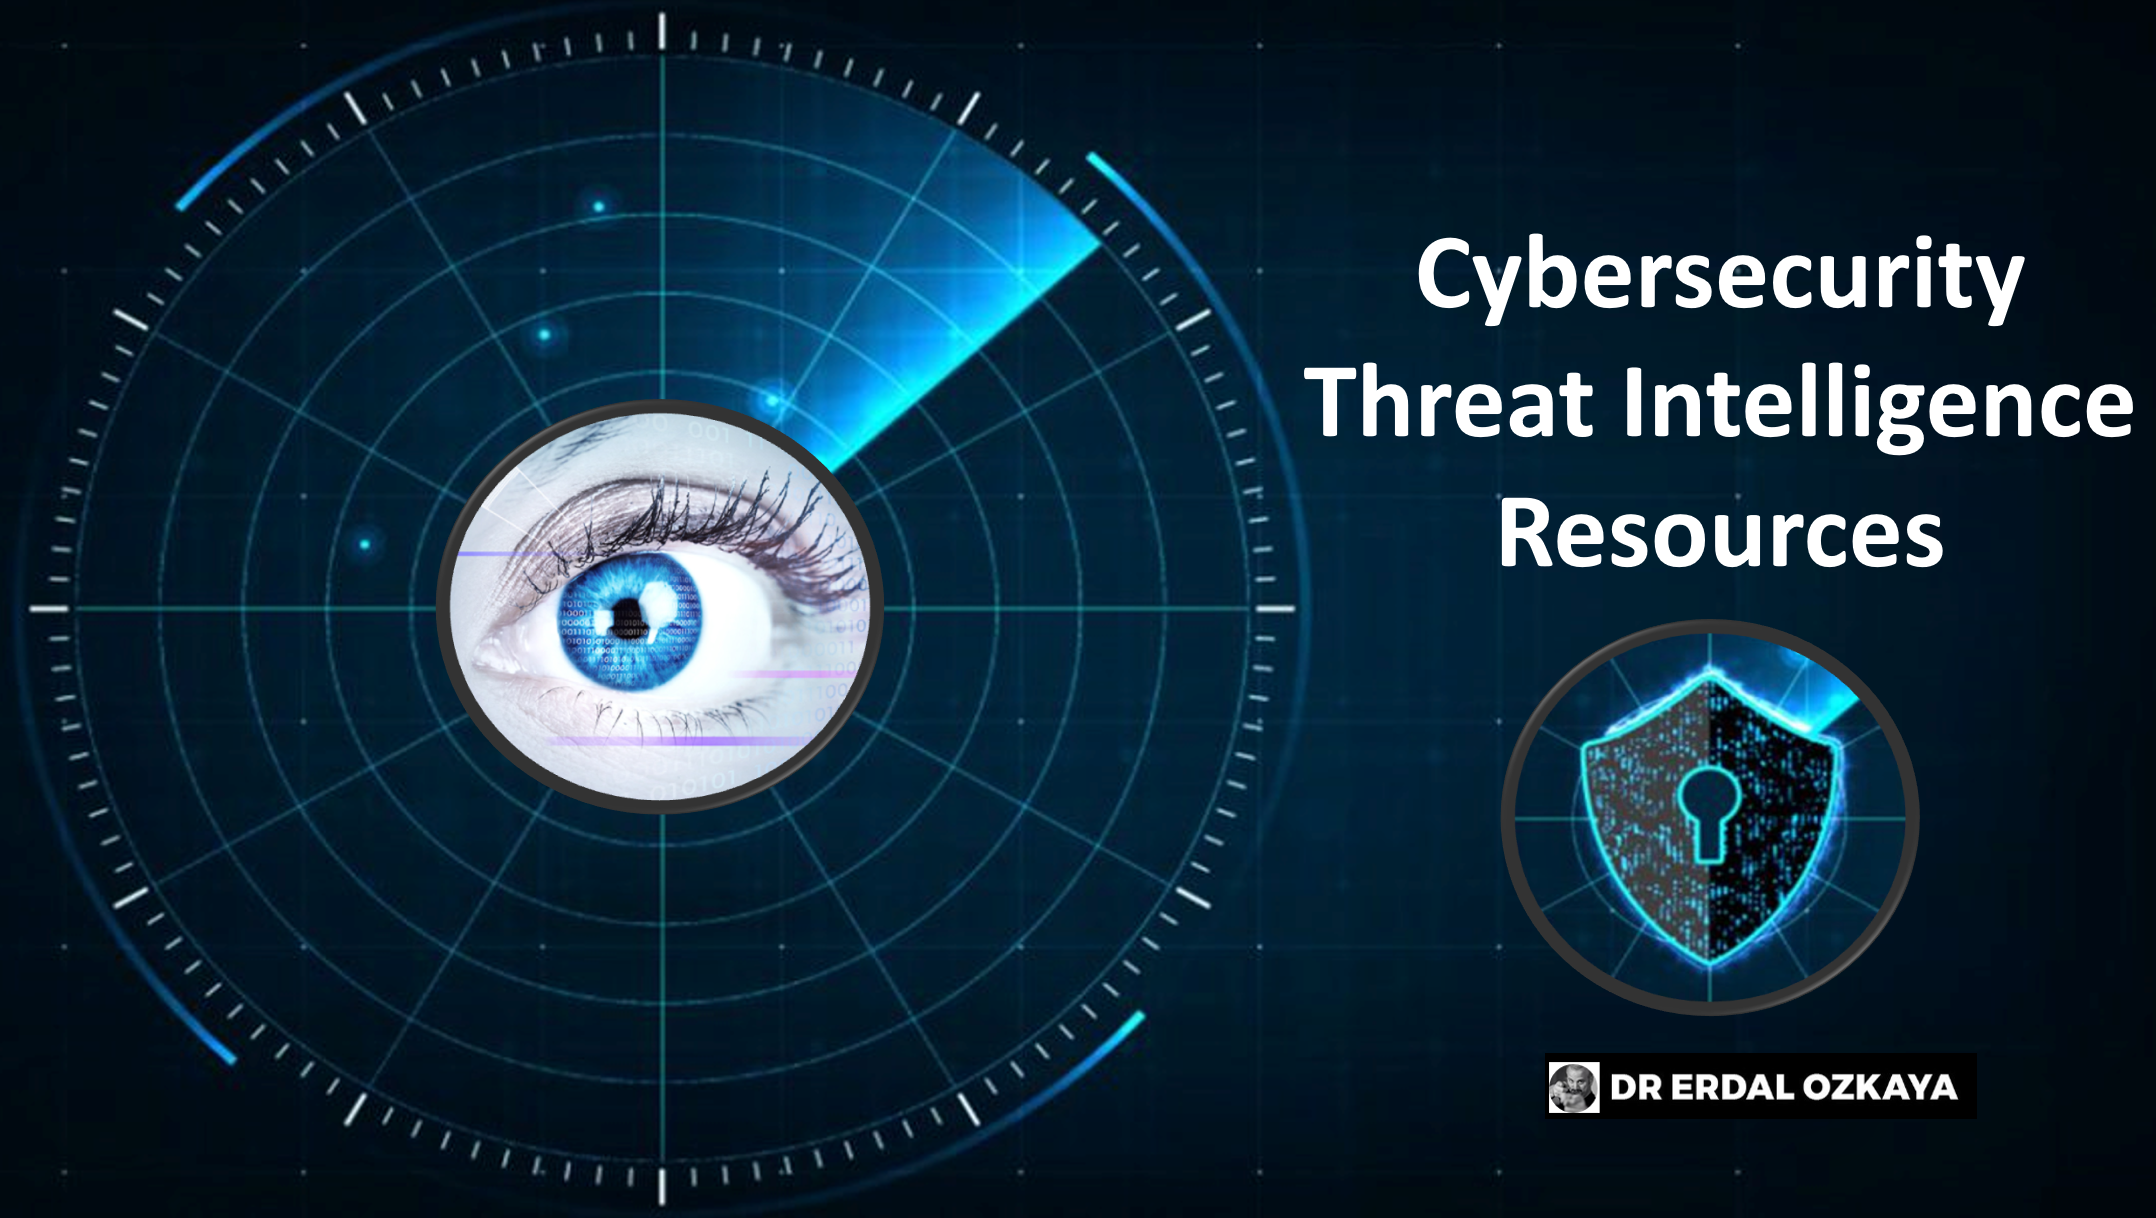 Cyber Threat Intelligence Resources | Dr. Erdal Ozkaya - Cybersecurity Blog